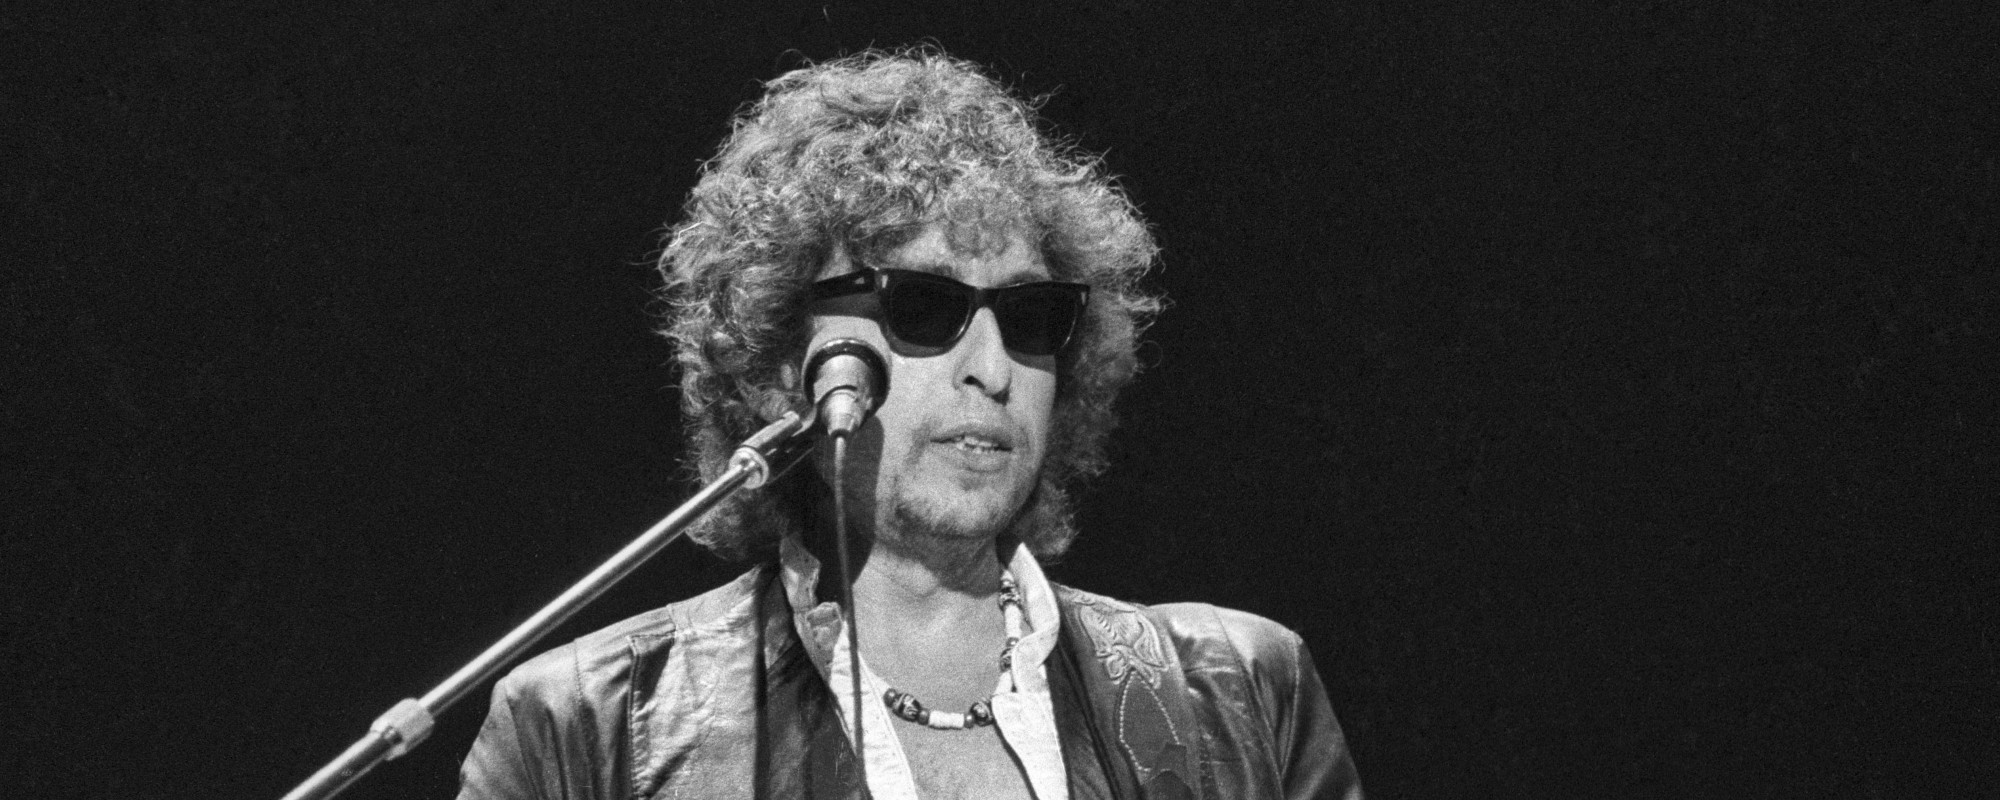 Is Bob Dylan’s Live ‘At Budokan’ Better Than Critics Think?